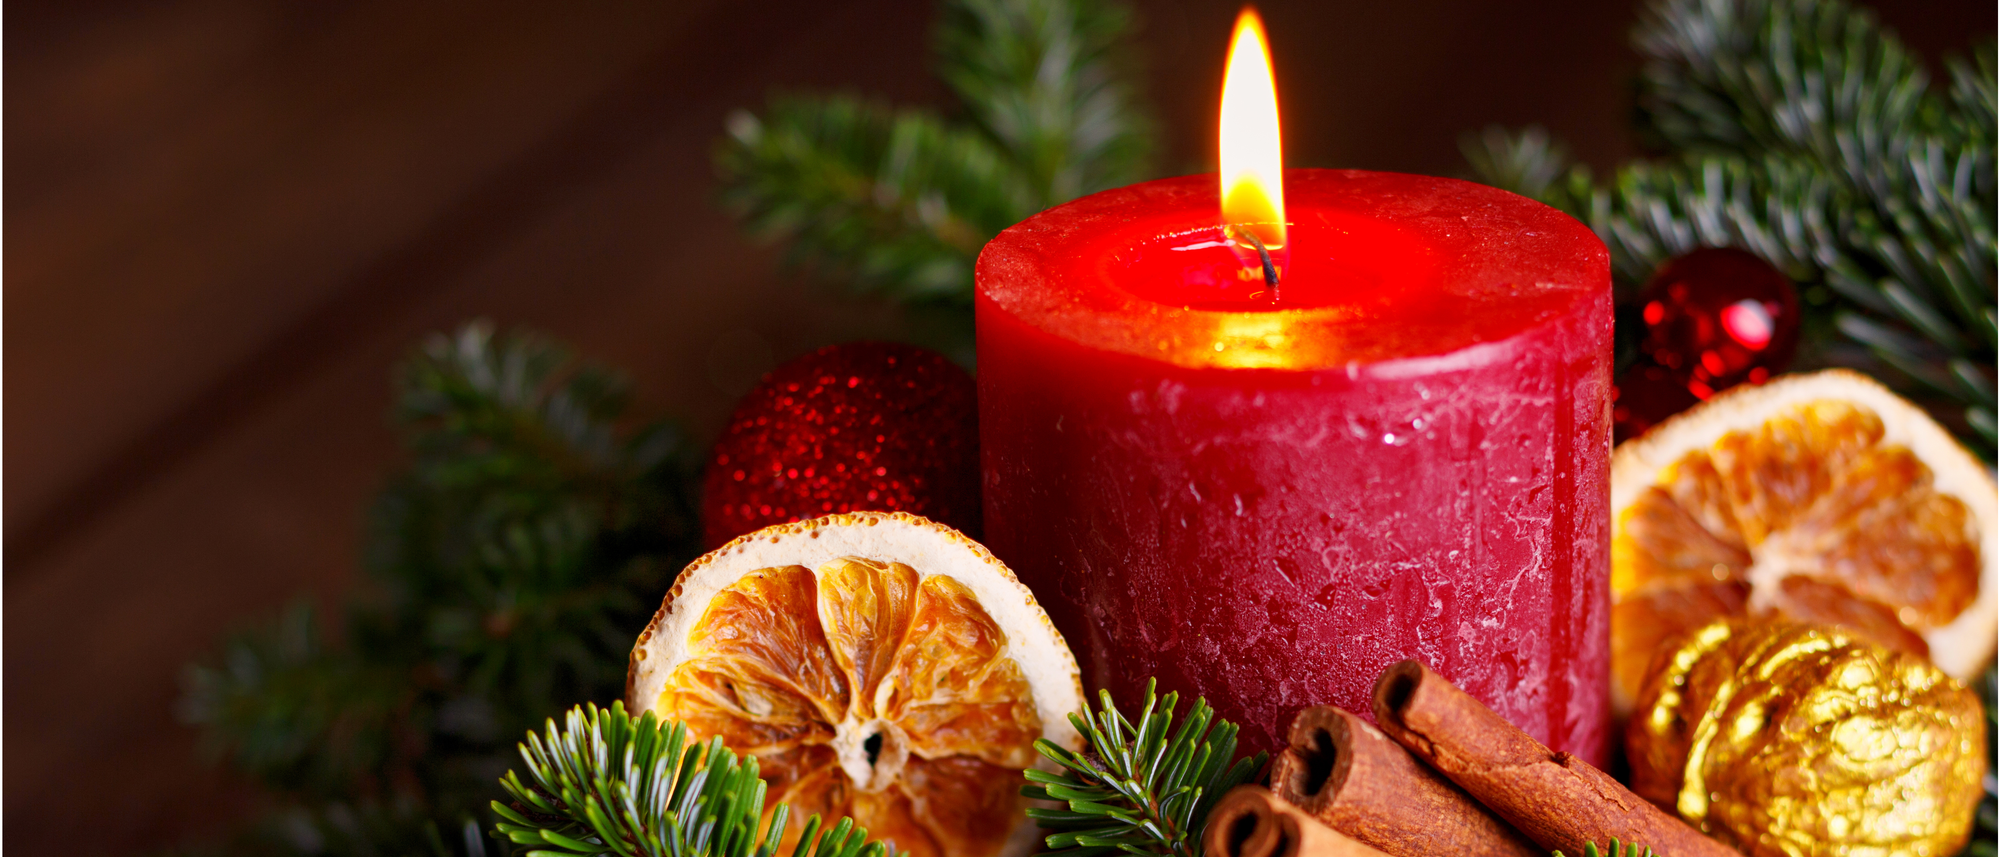 Adventsgesteck mit Tannenzweigen, Kerzen, Zimt, Orange, Nuss